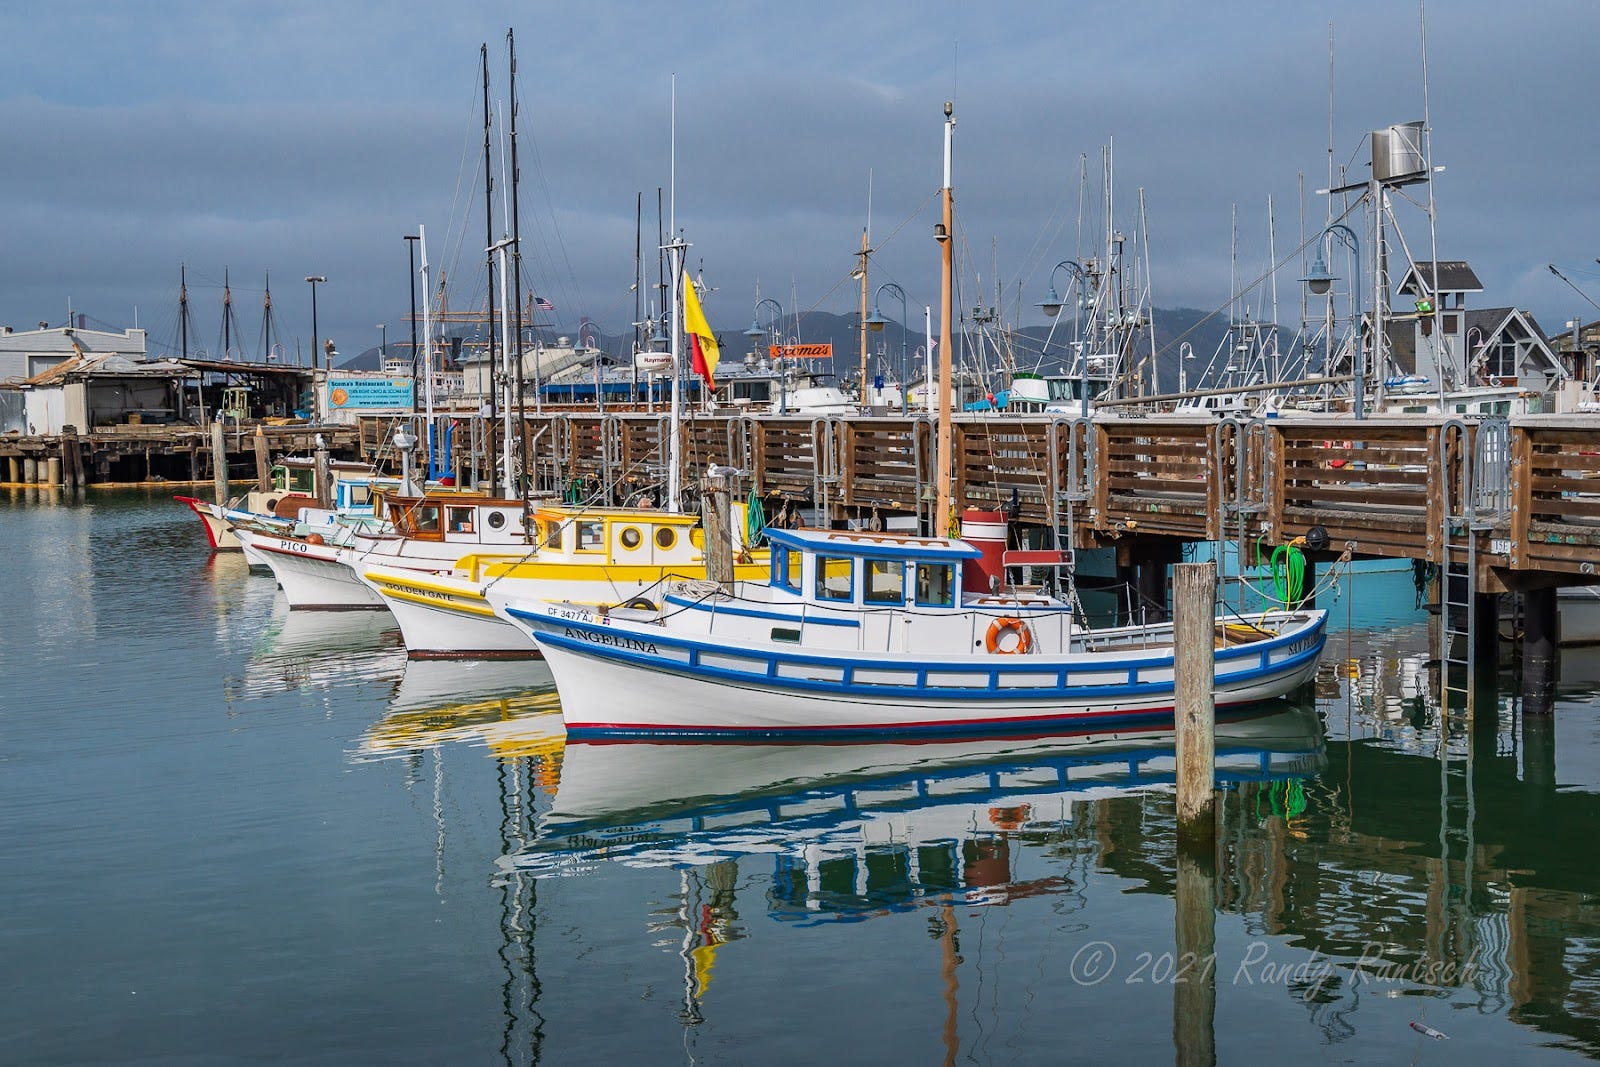 Fisherman's Wharf in San Francisco - Walk Along San Francisco's